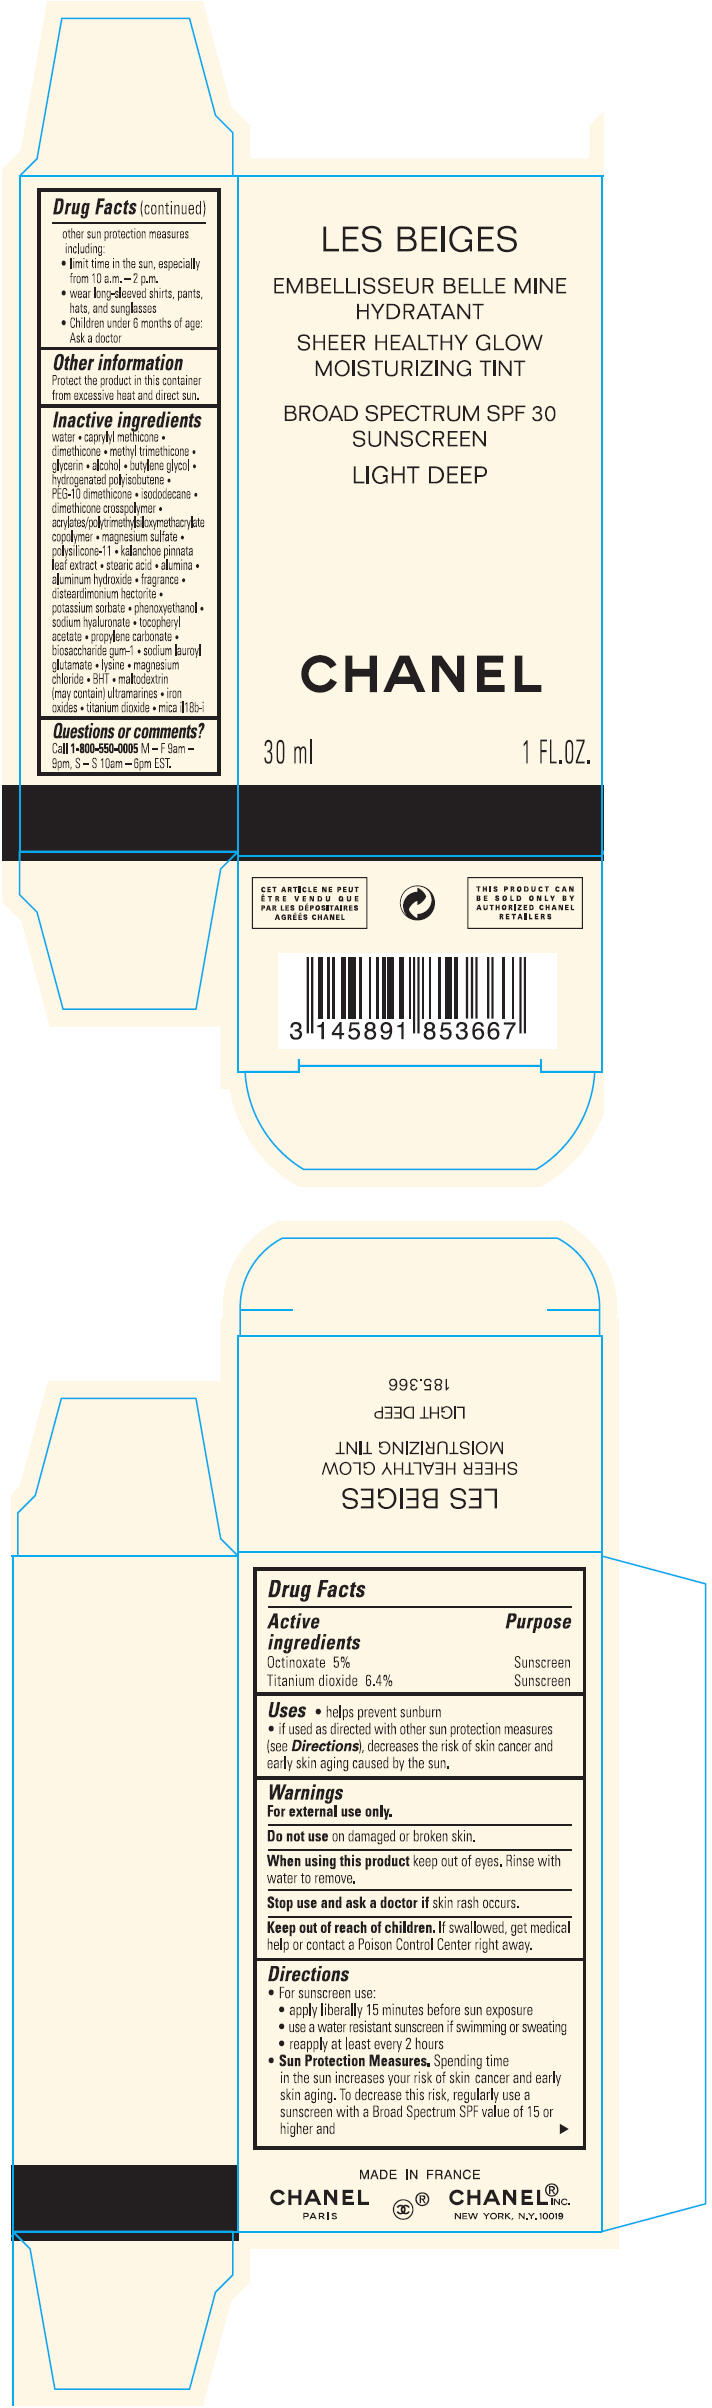 PRINCIPAL DISPLAY PANEL - 30 ml Bottle Carton - Light Deep